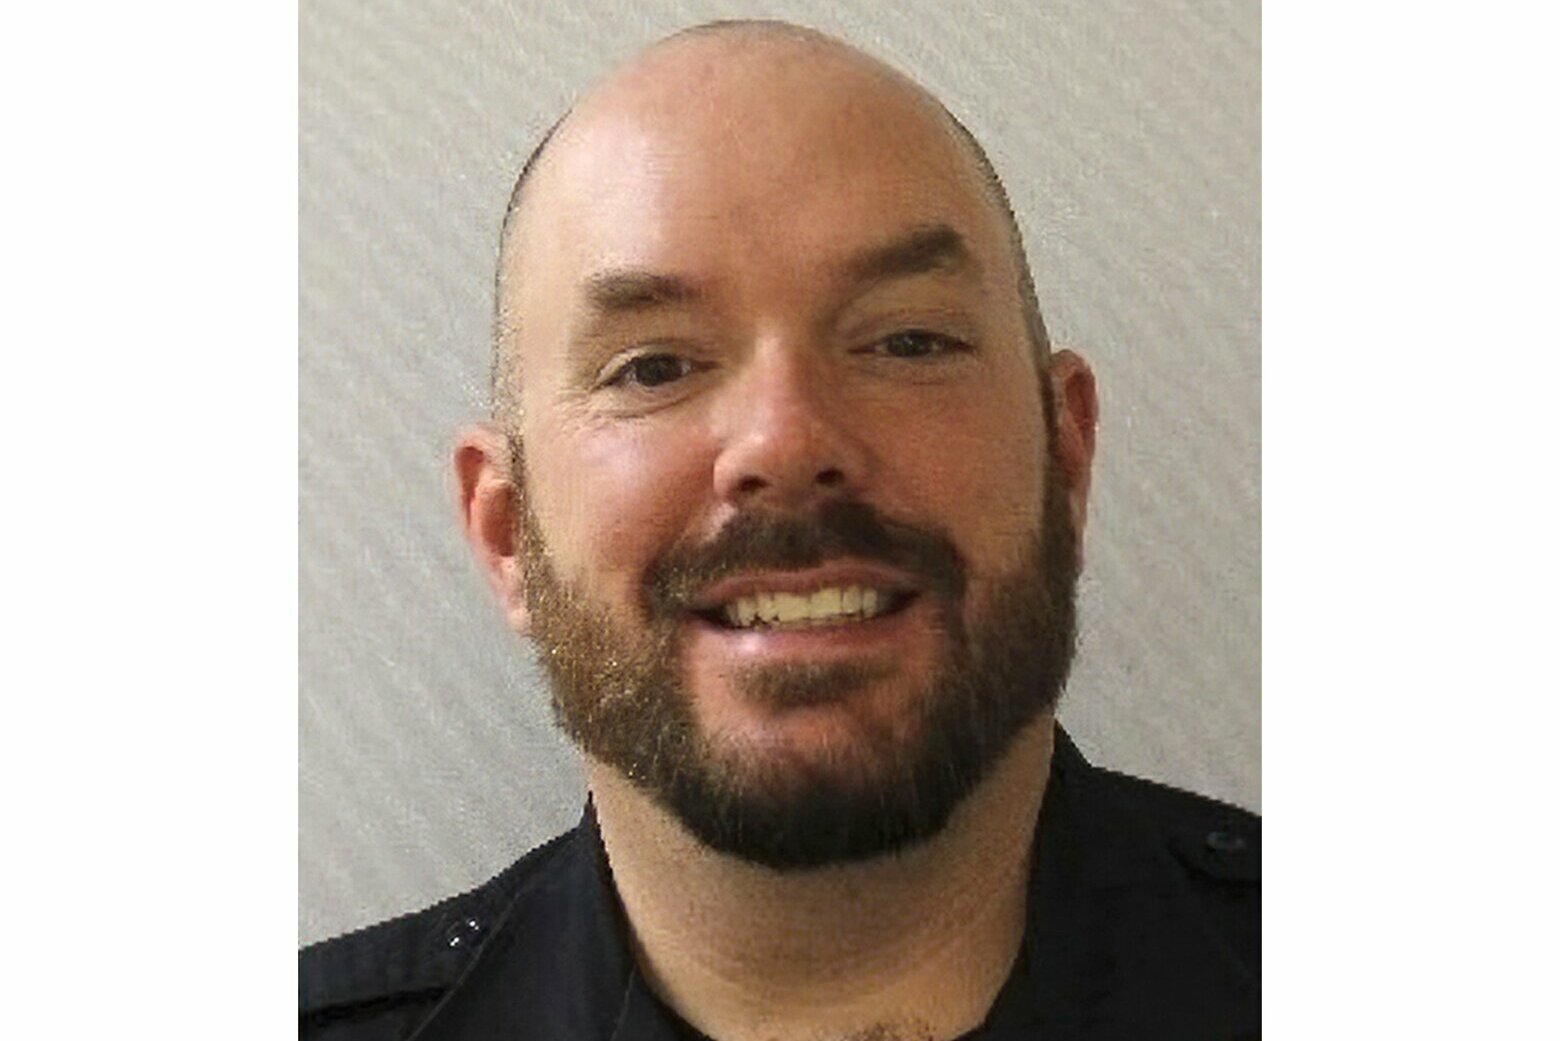 U.S. Capitol Police officer William “Billy” Evans